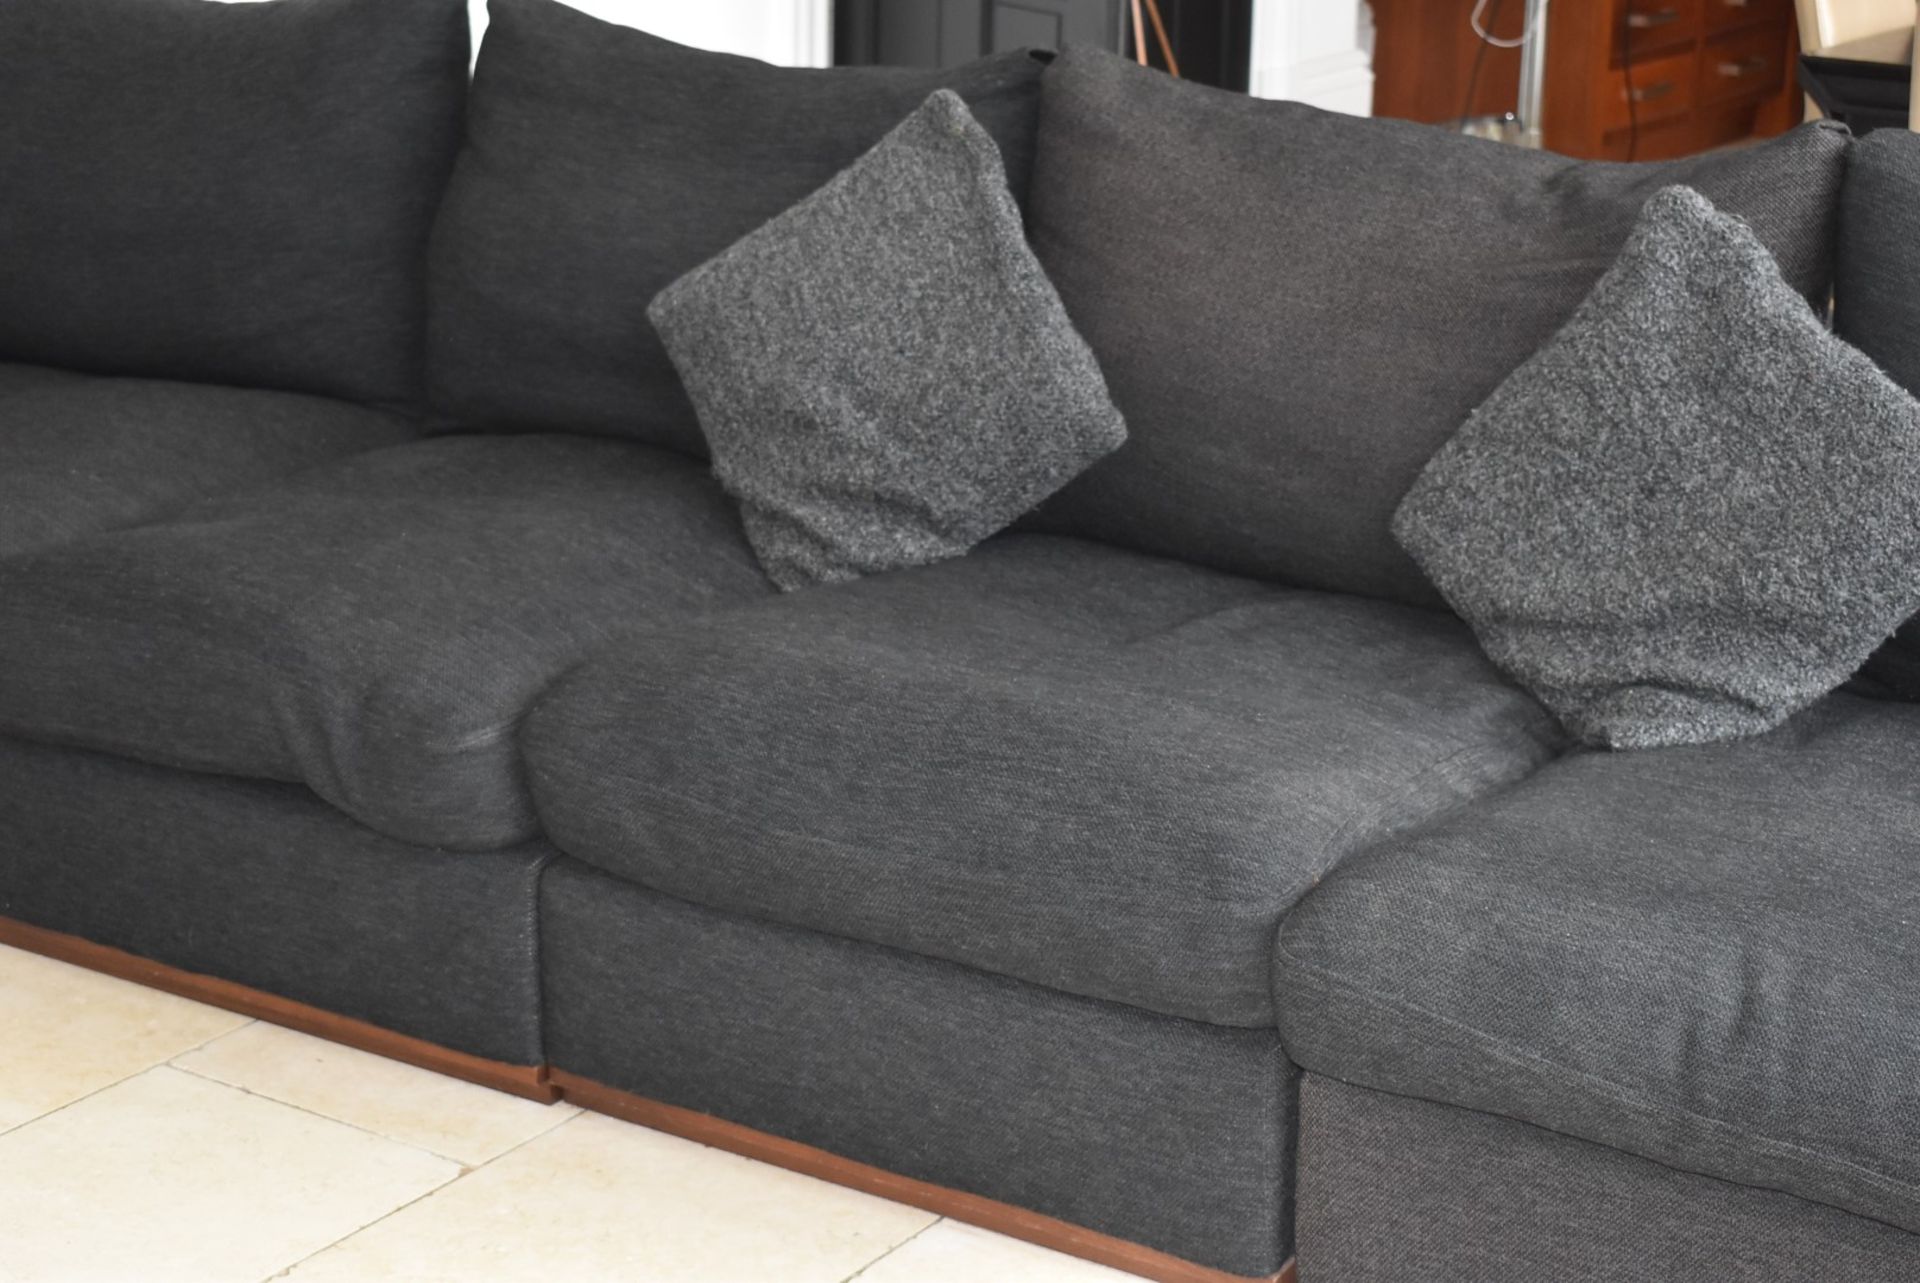 1 x Large Corner Sofa Upholstered in Dark Grey Grey Fabric - Inc Footstool - NO VAT ON THE HAMMER! - Image 2 of 15